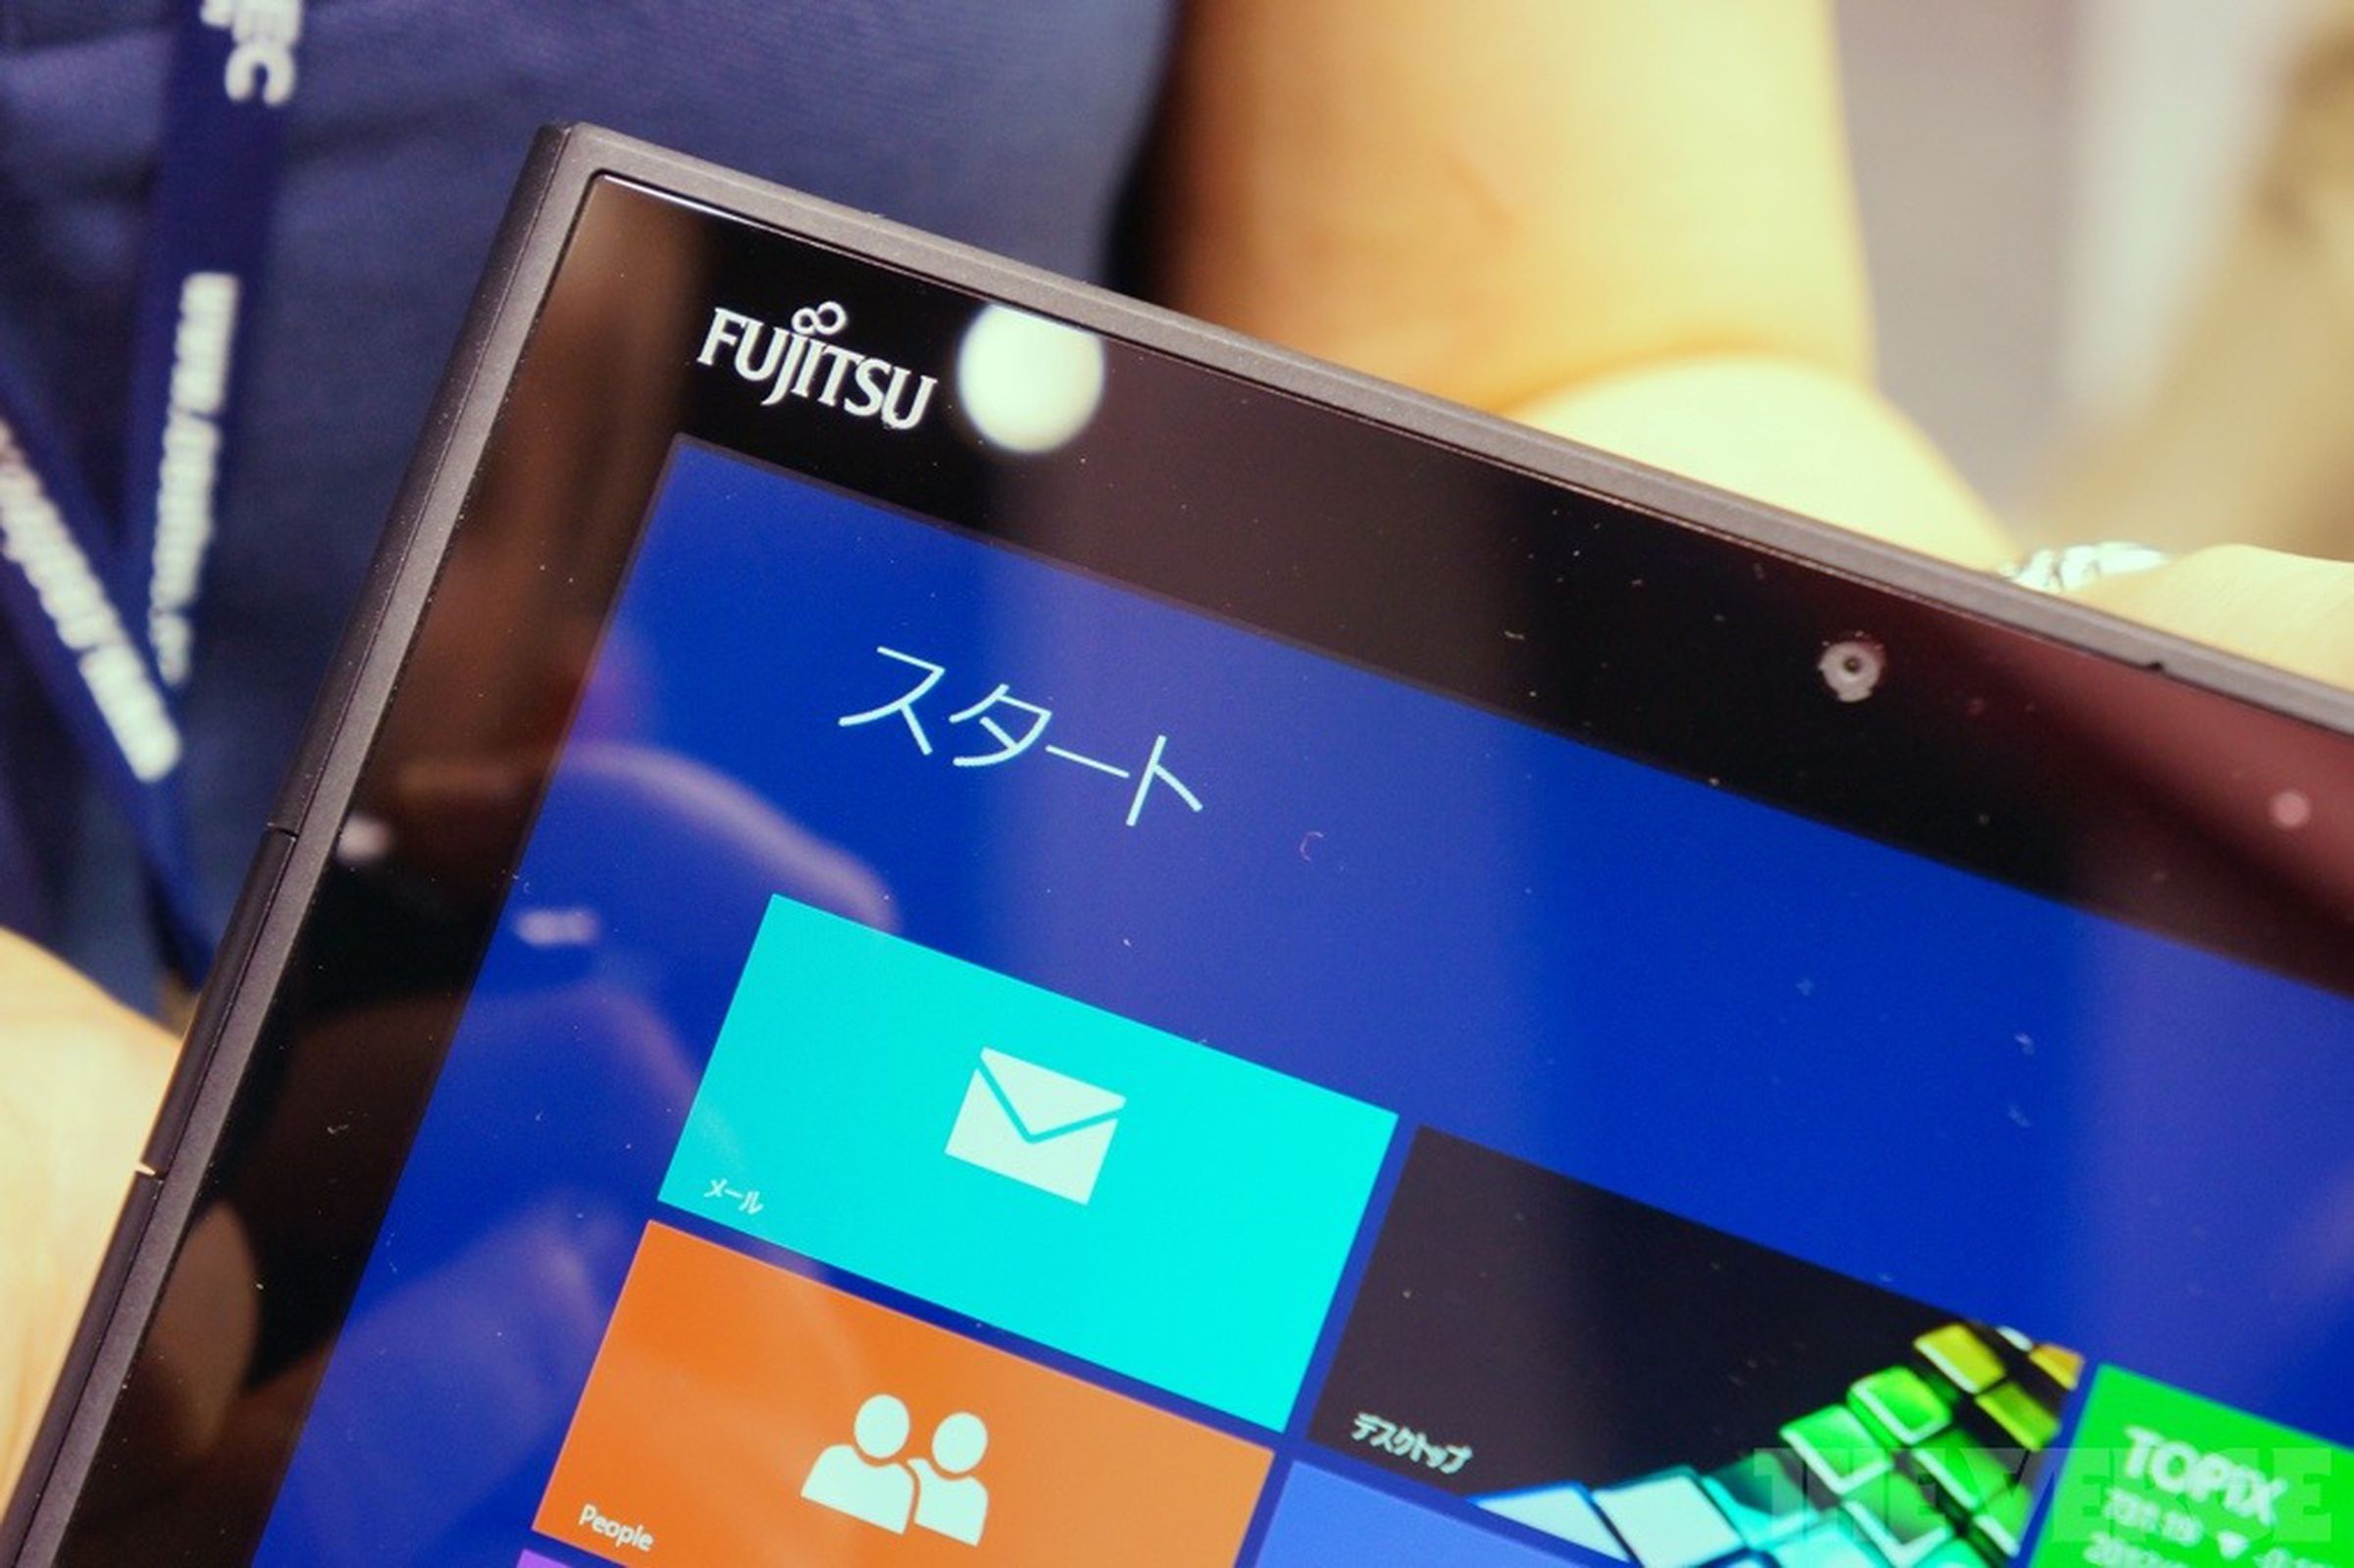 Fujitsu's thin-and-light Windows 8 tablet